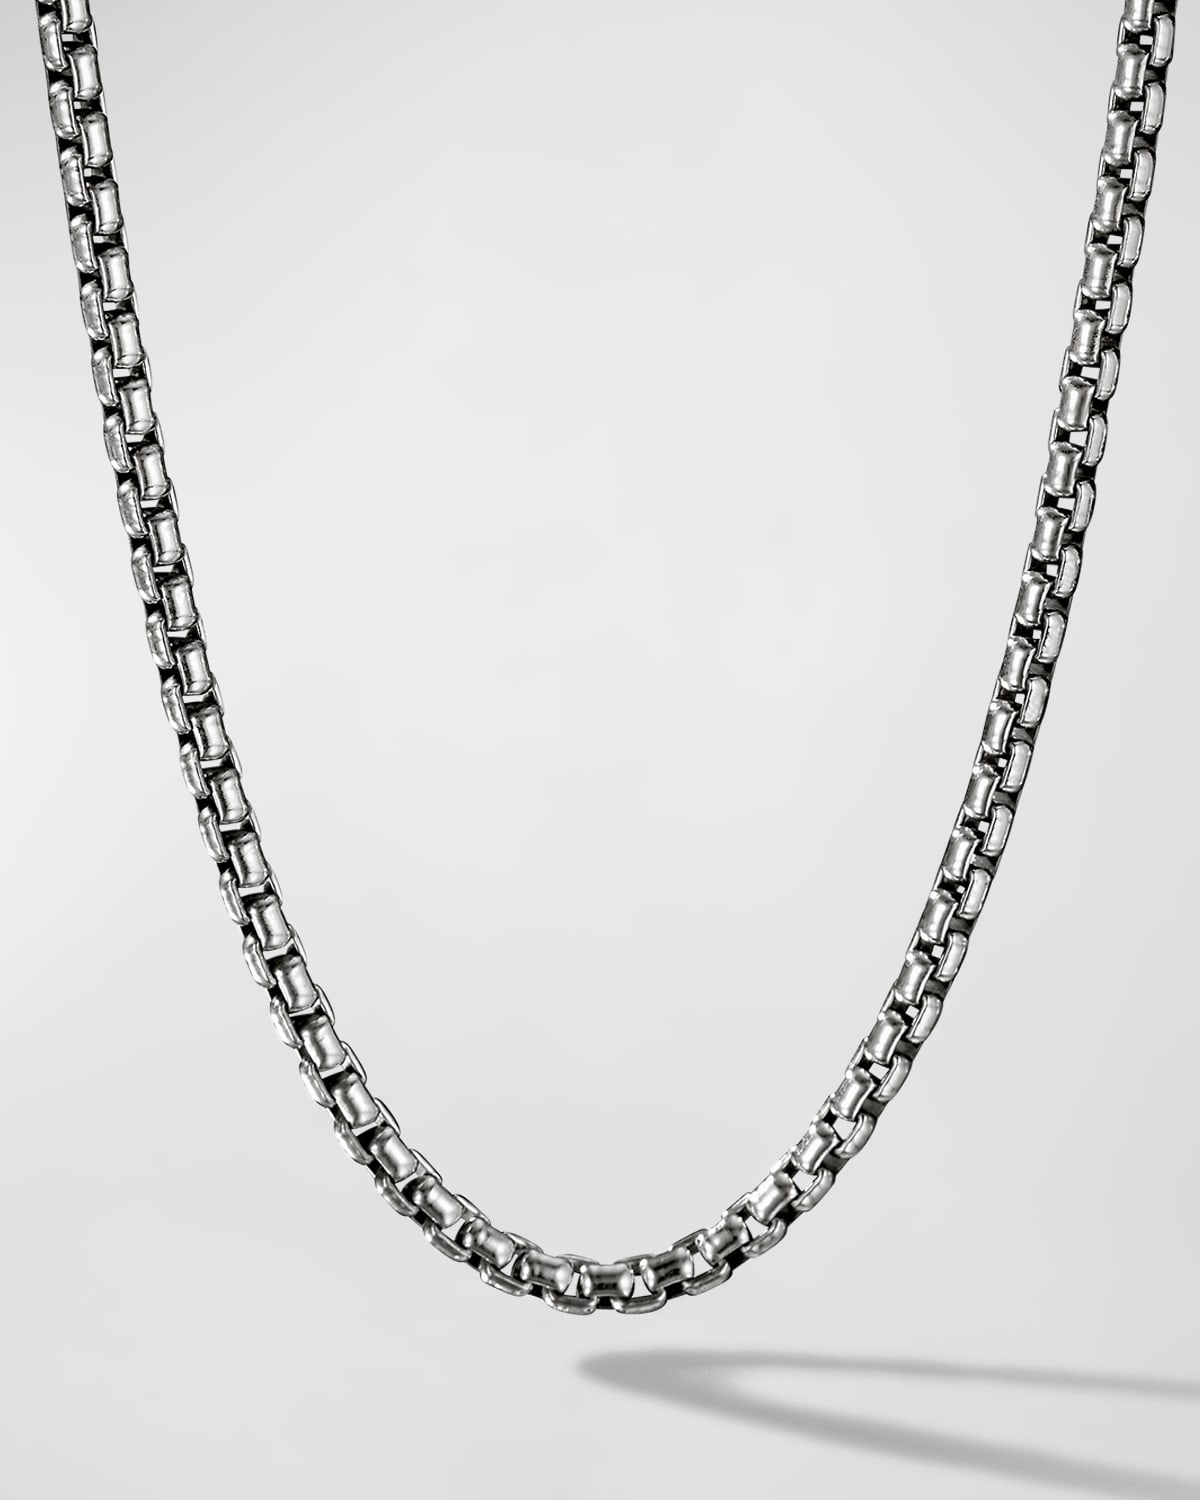 Men's Box Chain Necklace in Silver, 3.6mm, 24"L